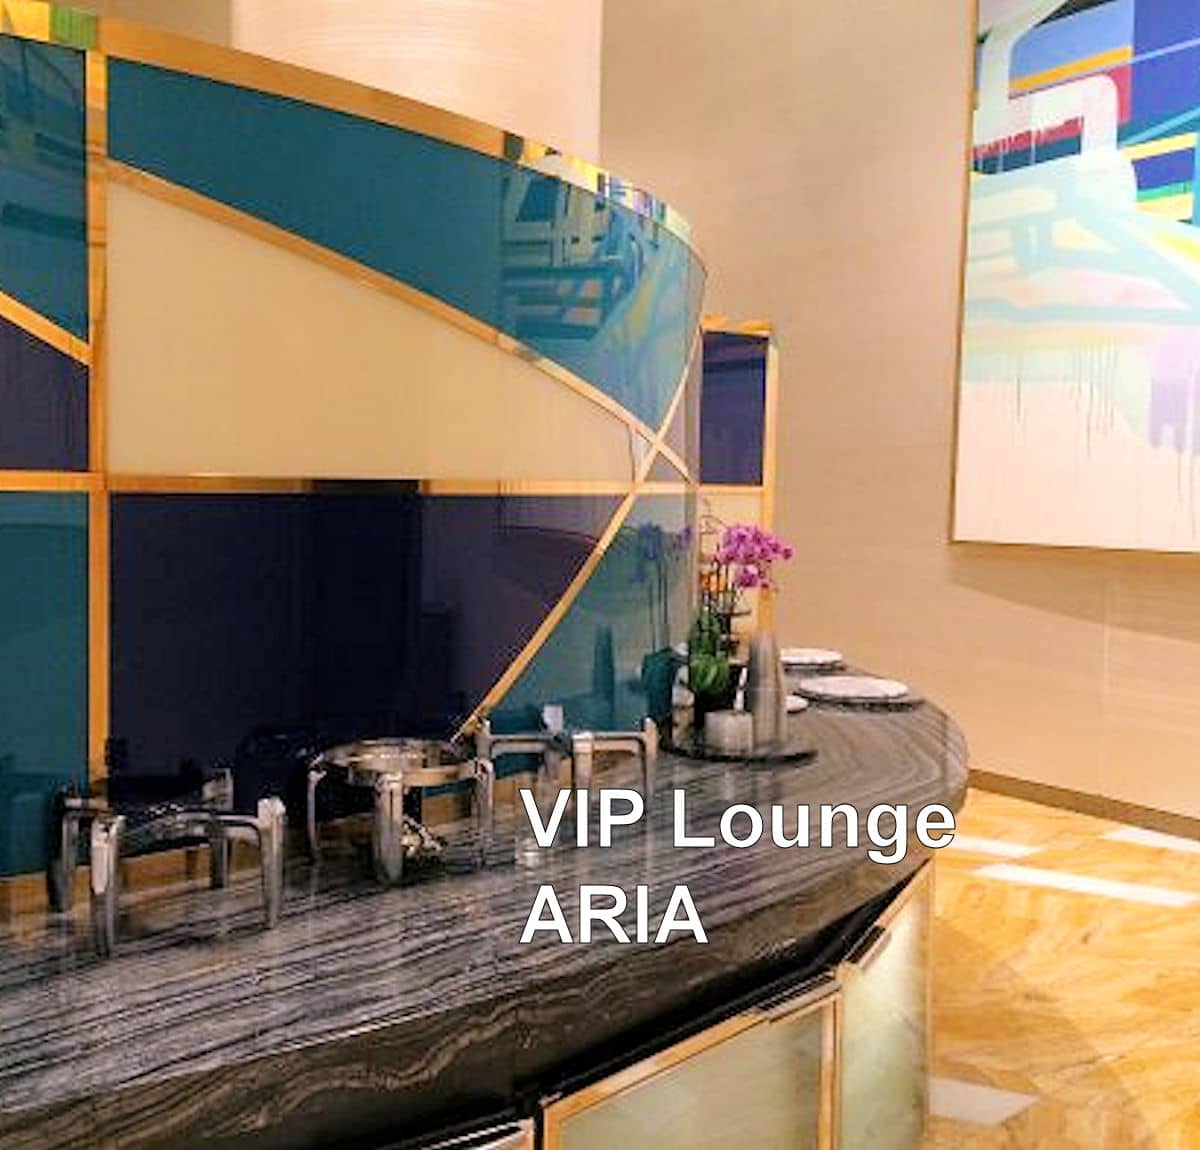 VIP lounge at aria website